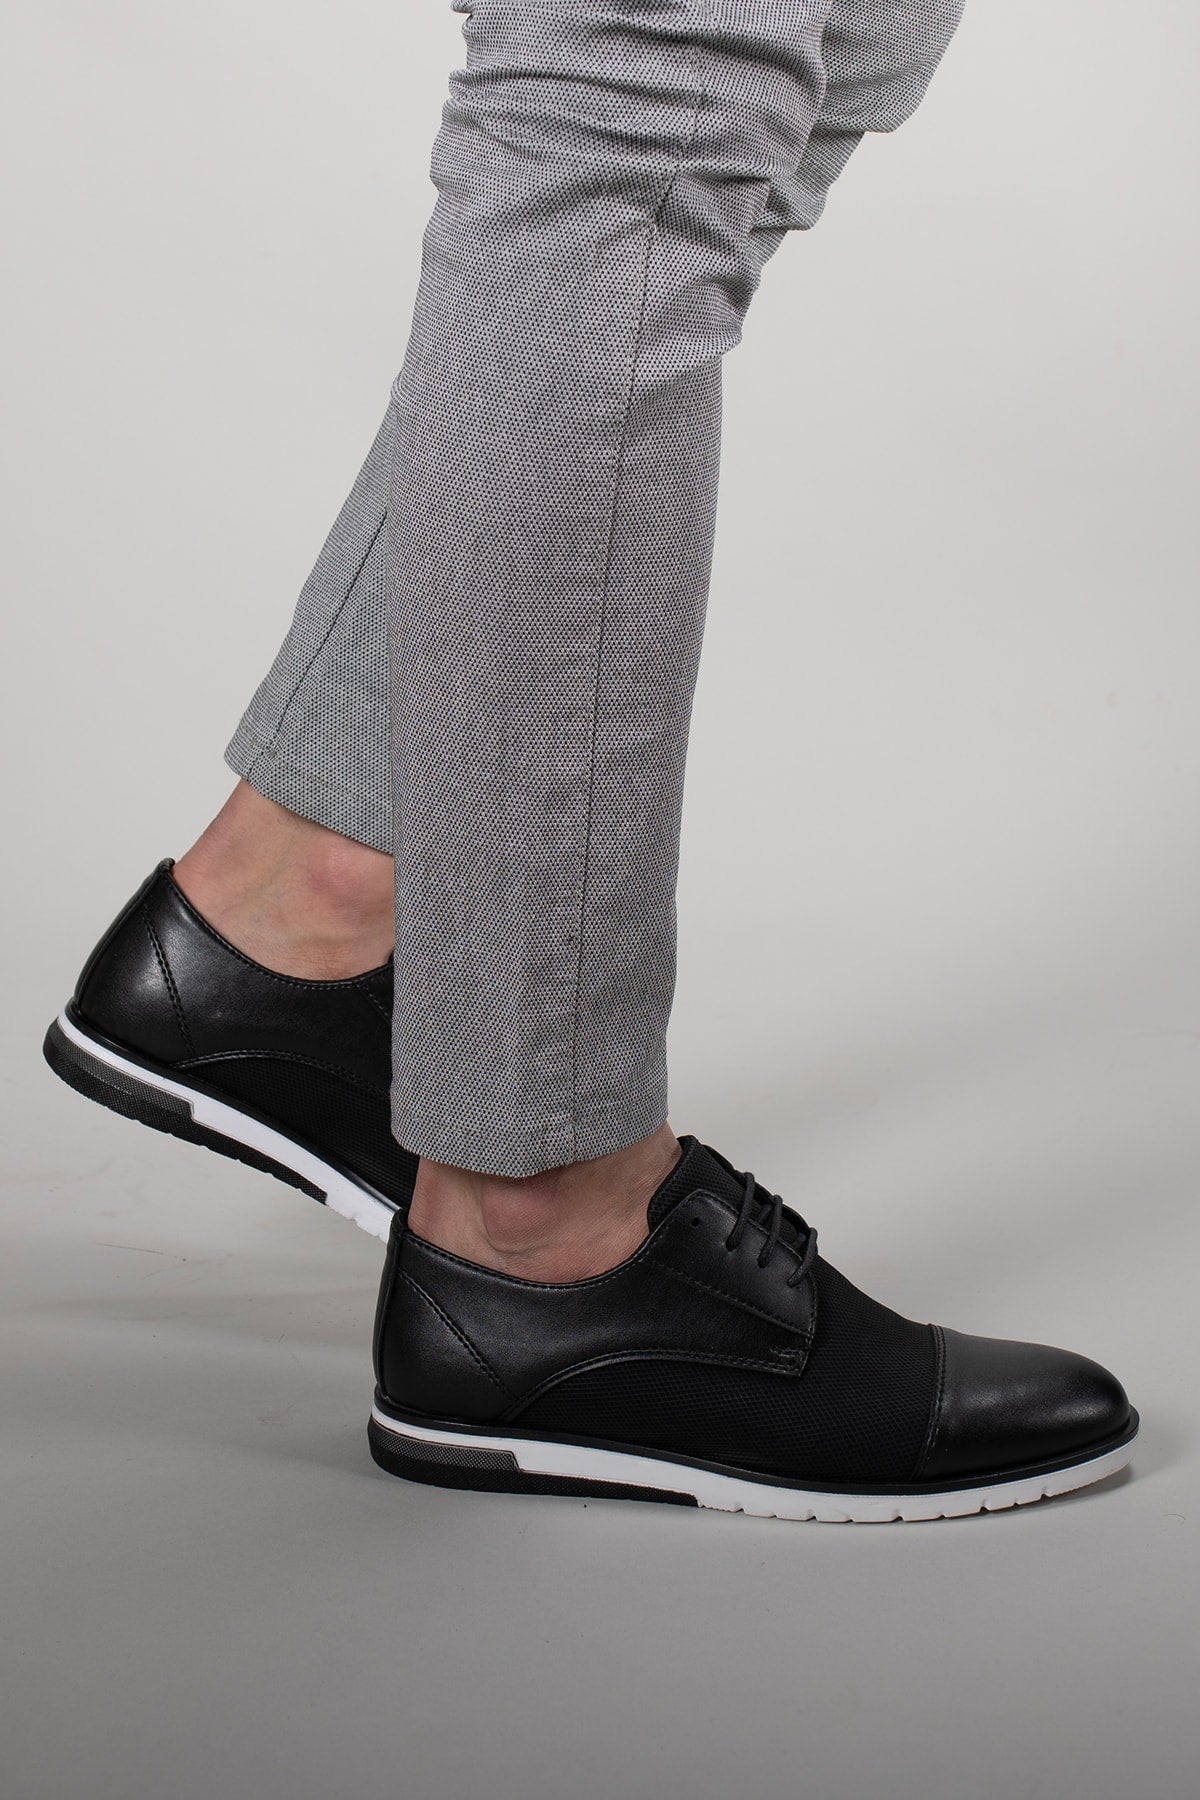 Men's Casual Shoes 0012397 Black White